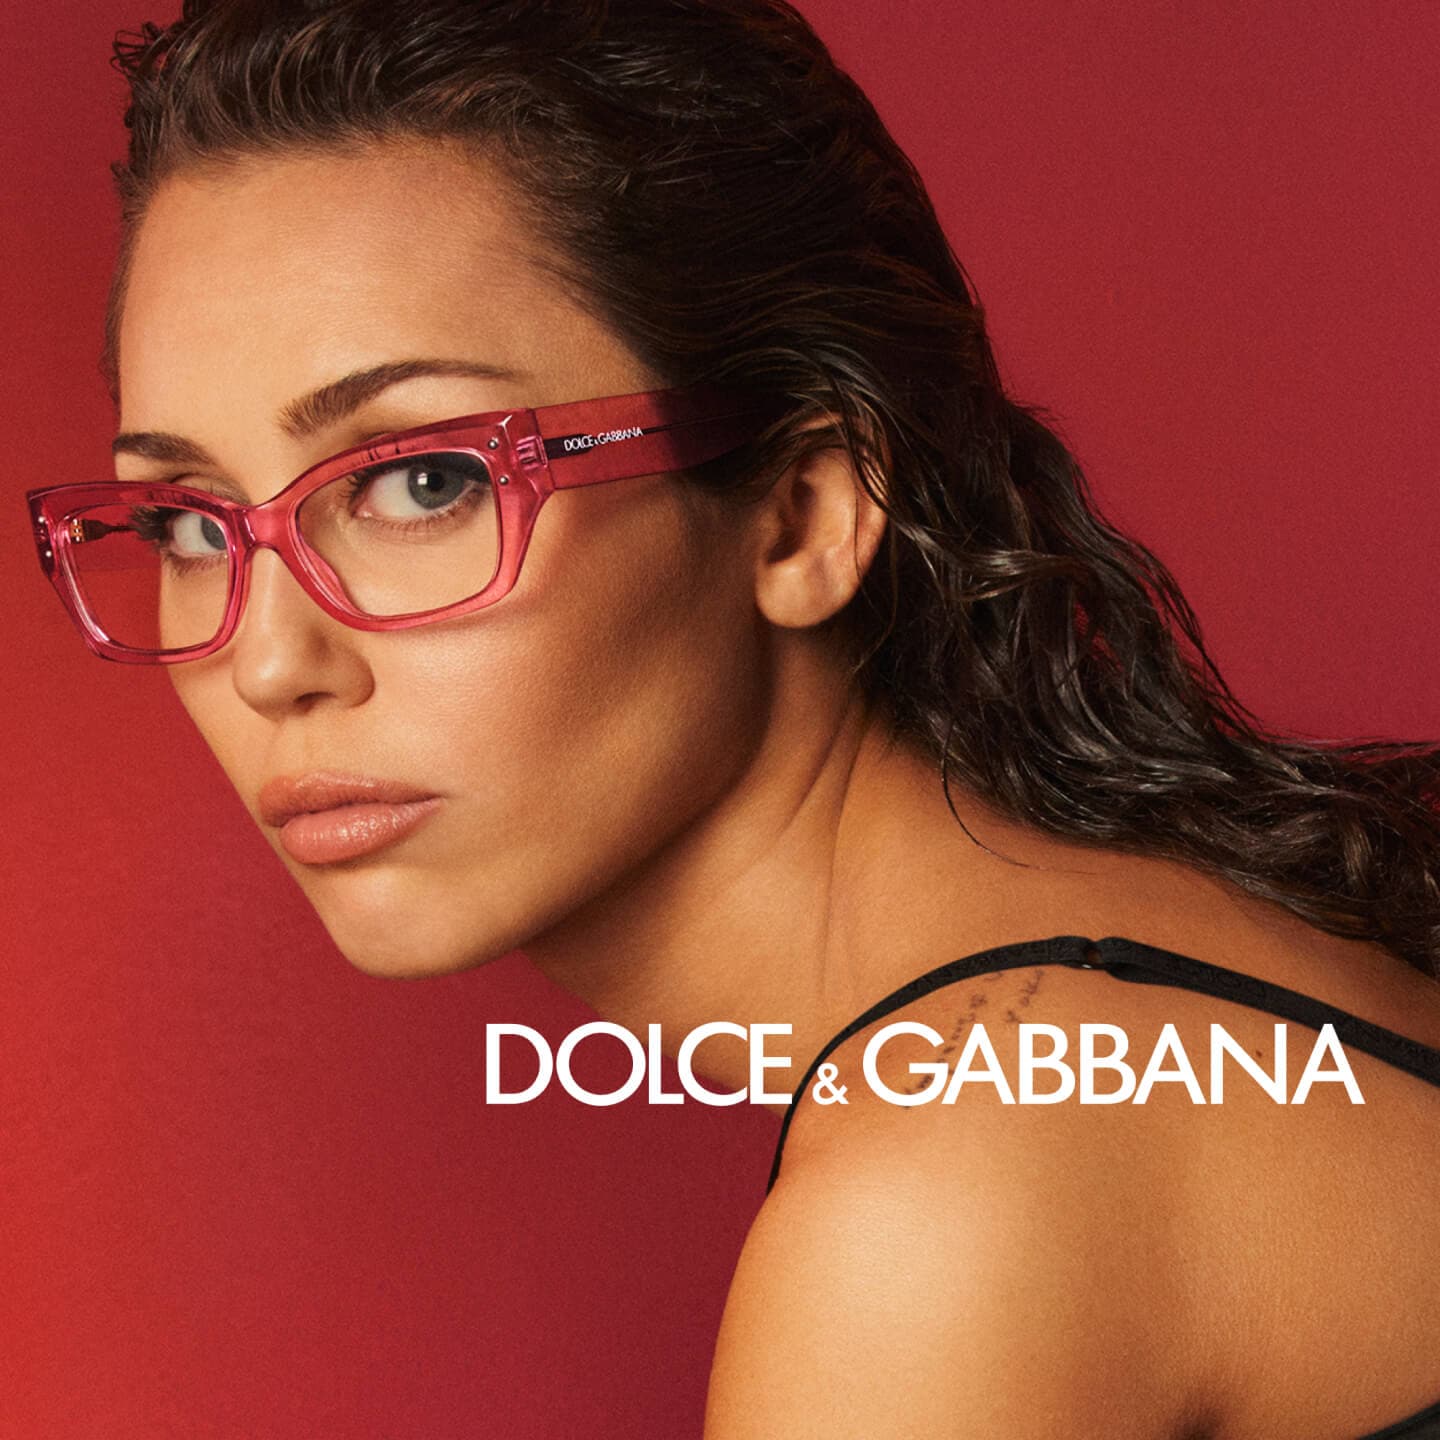 Dolce & Gabbana silk-blend leopard print jumpsuit - Gold